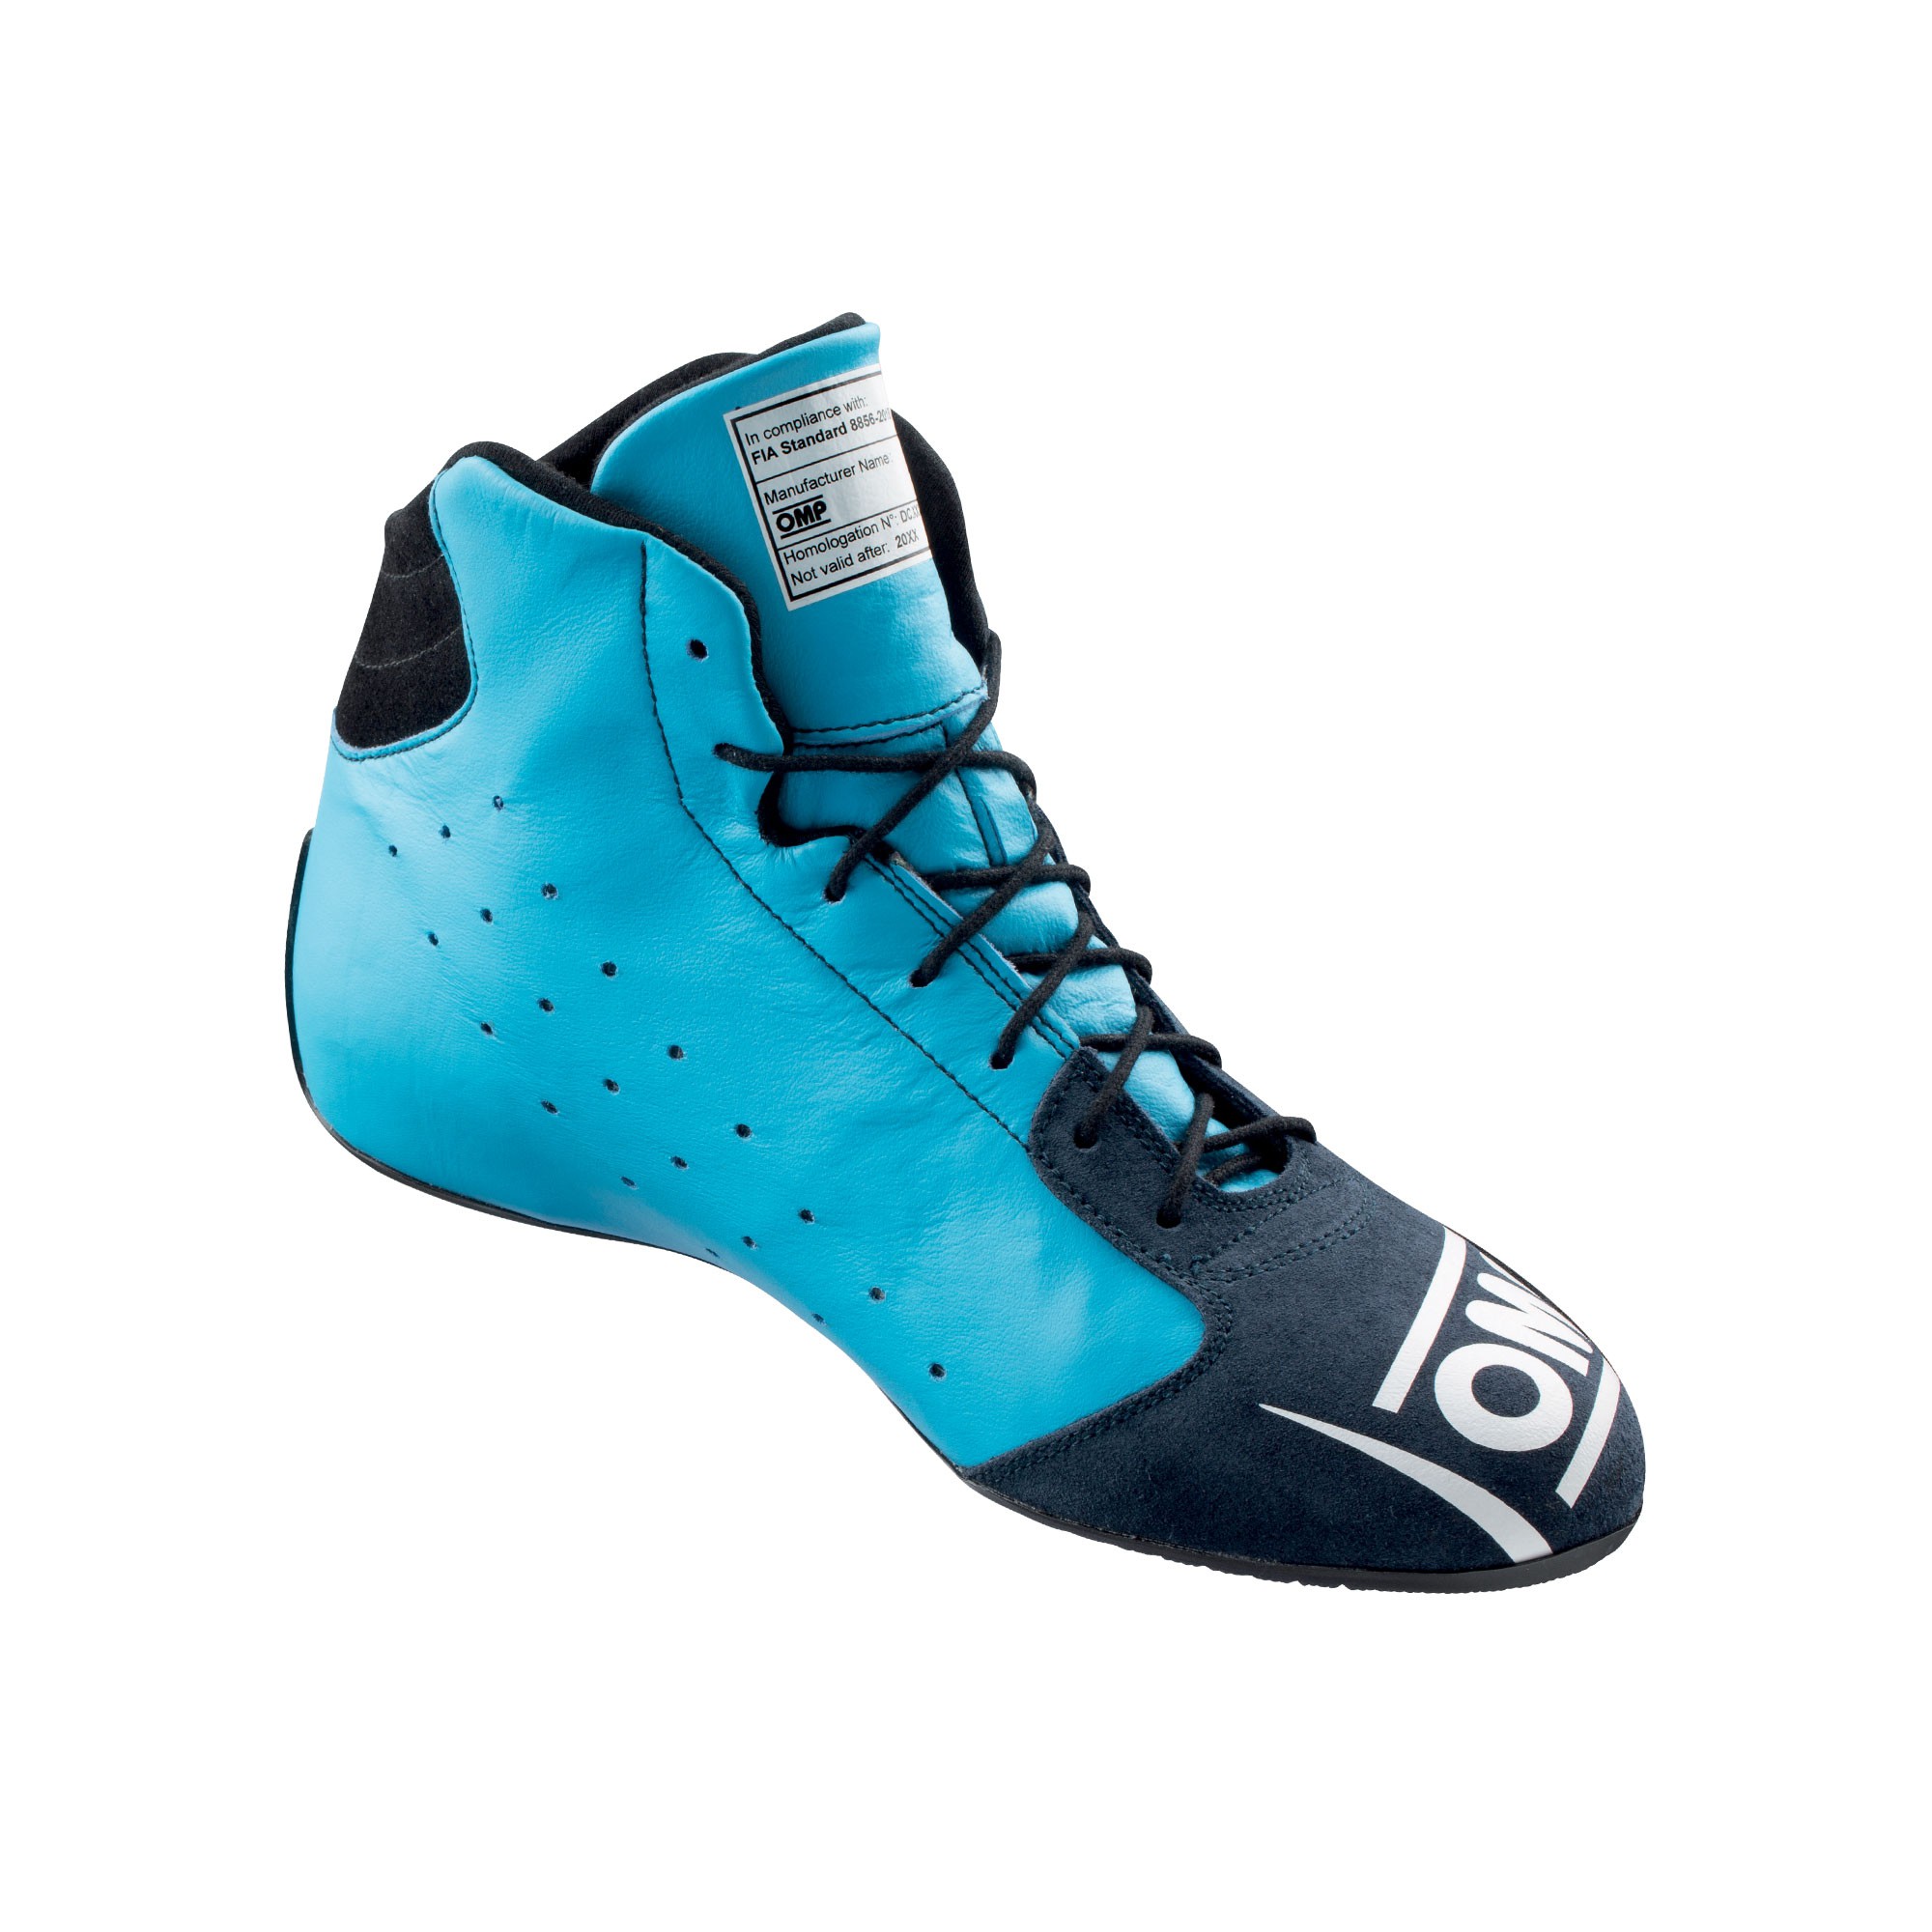 IC/80304144 Tecnica Evo Shoes, Blue, Size 44 OMP 